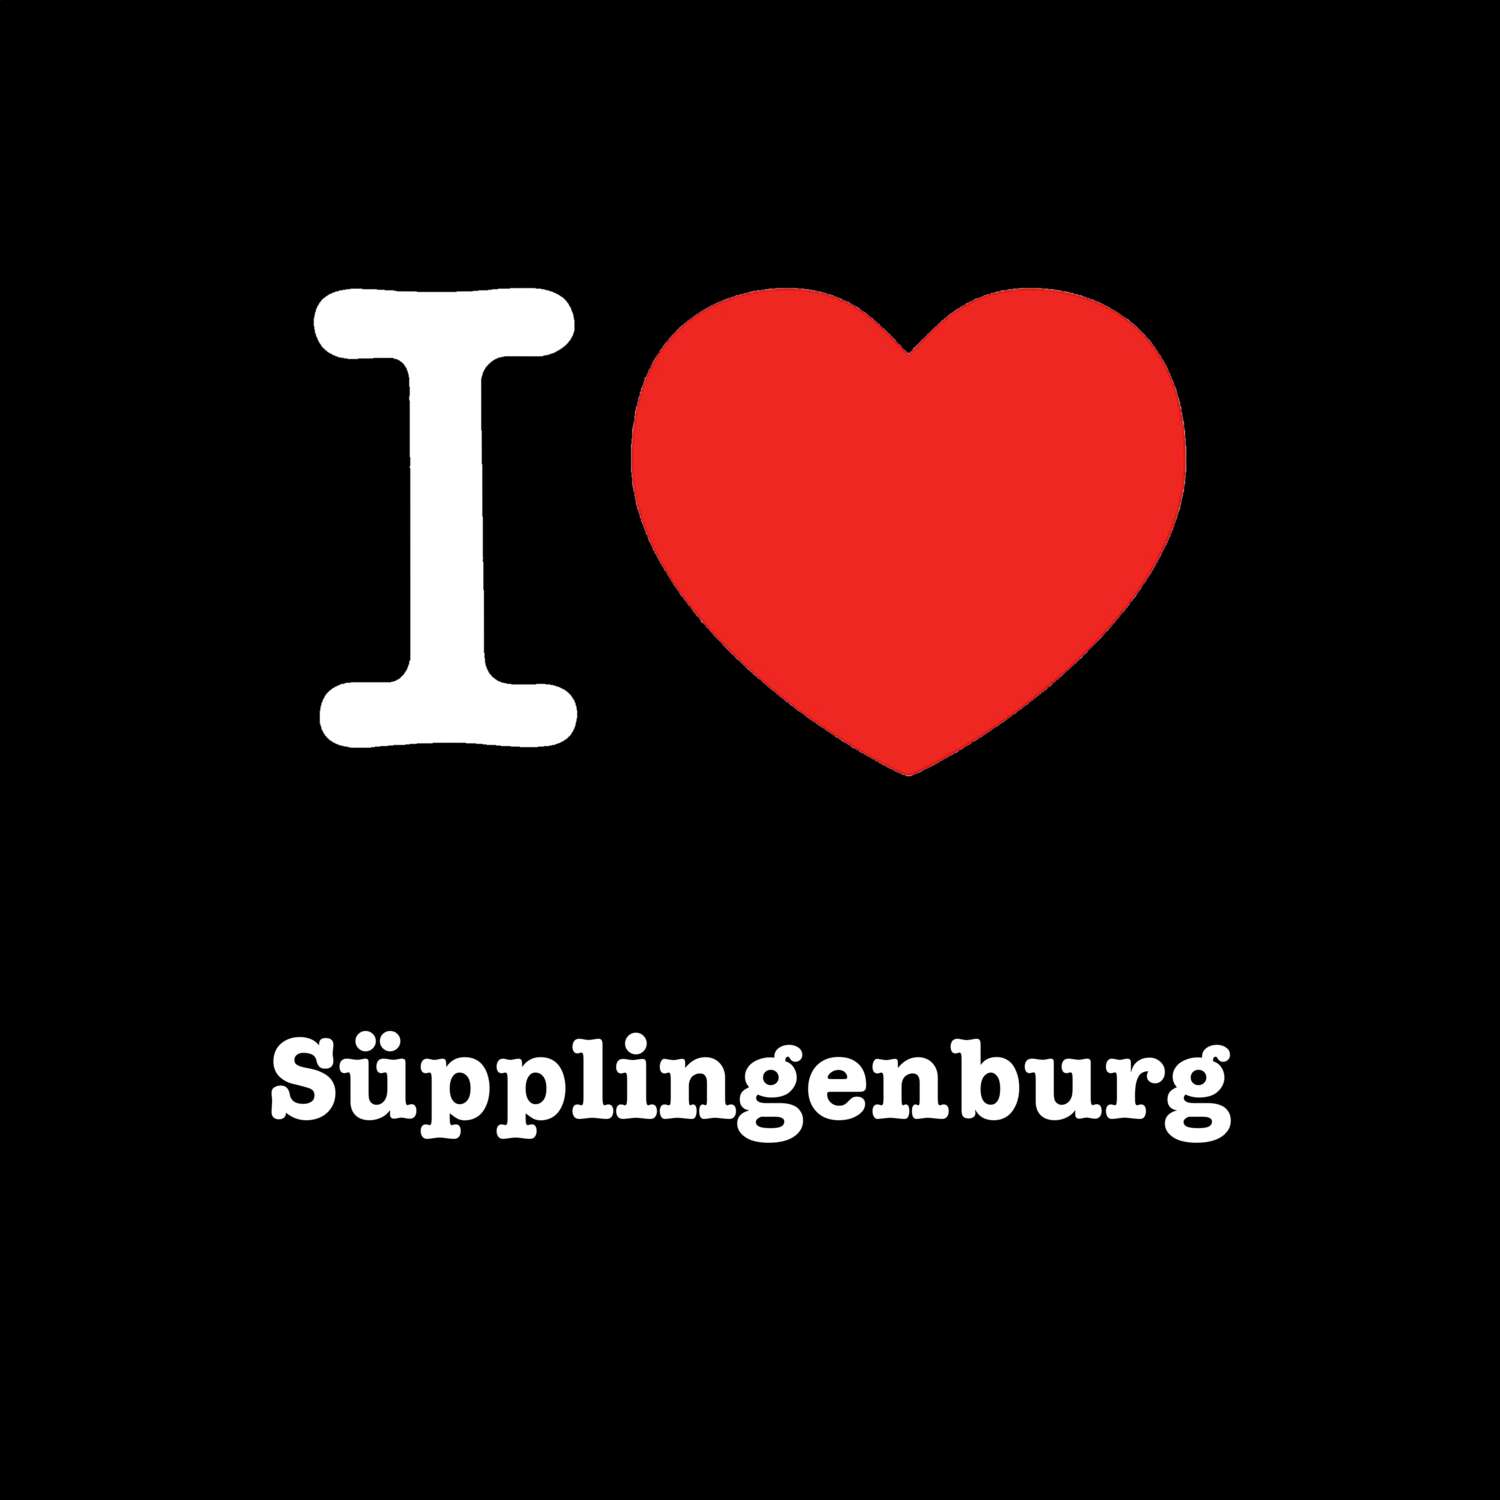 Süpplingenburg T-Shirt »I love«